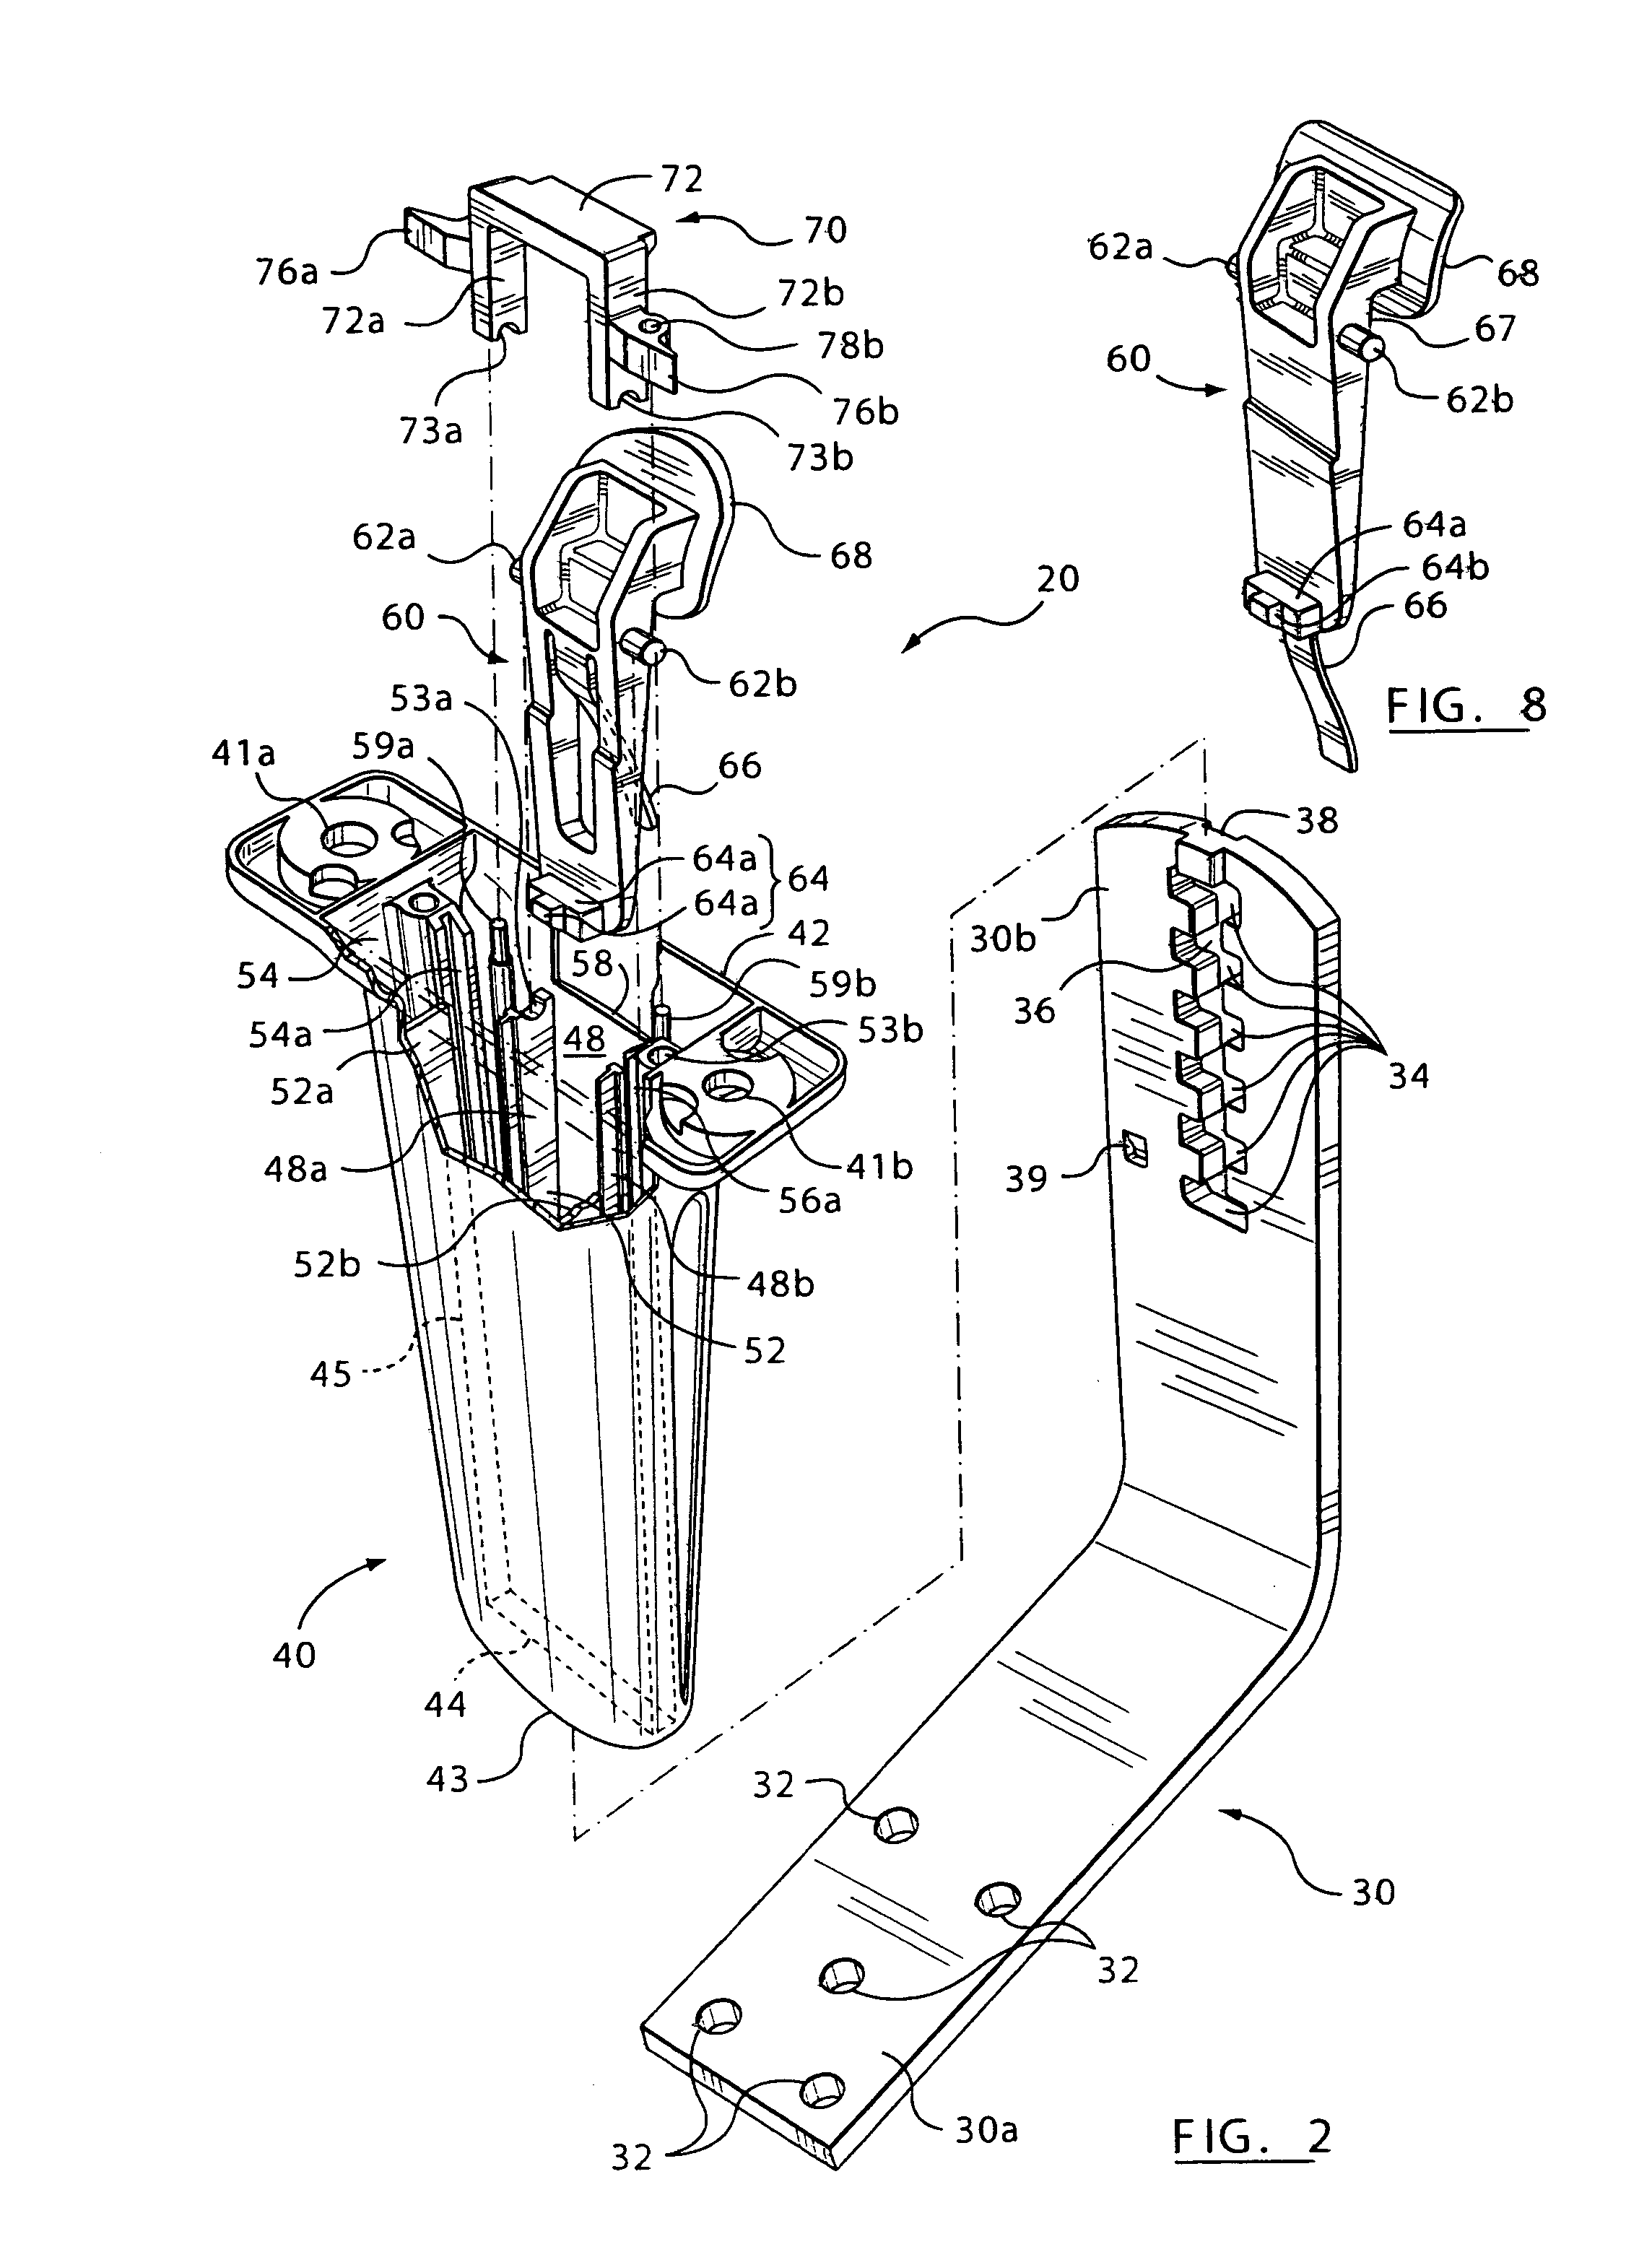 Height-adjustment mechanism for an armrest